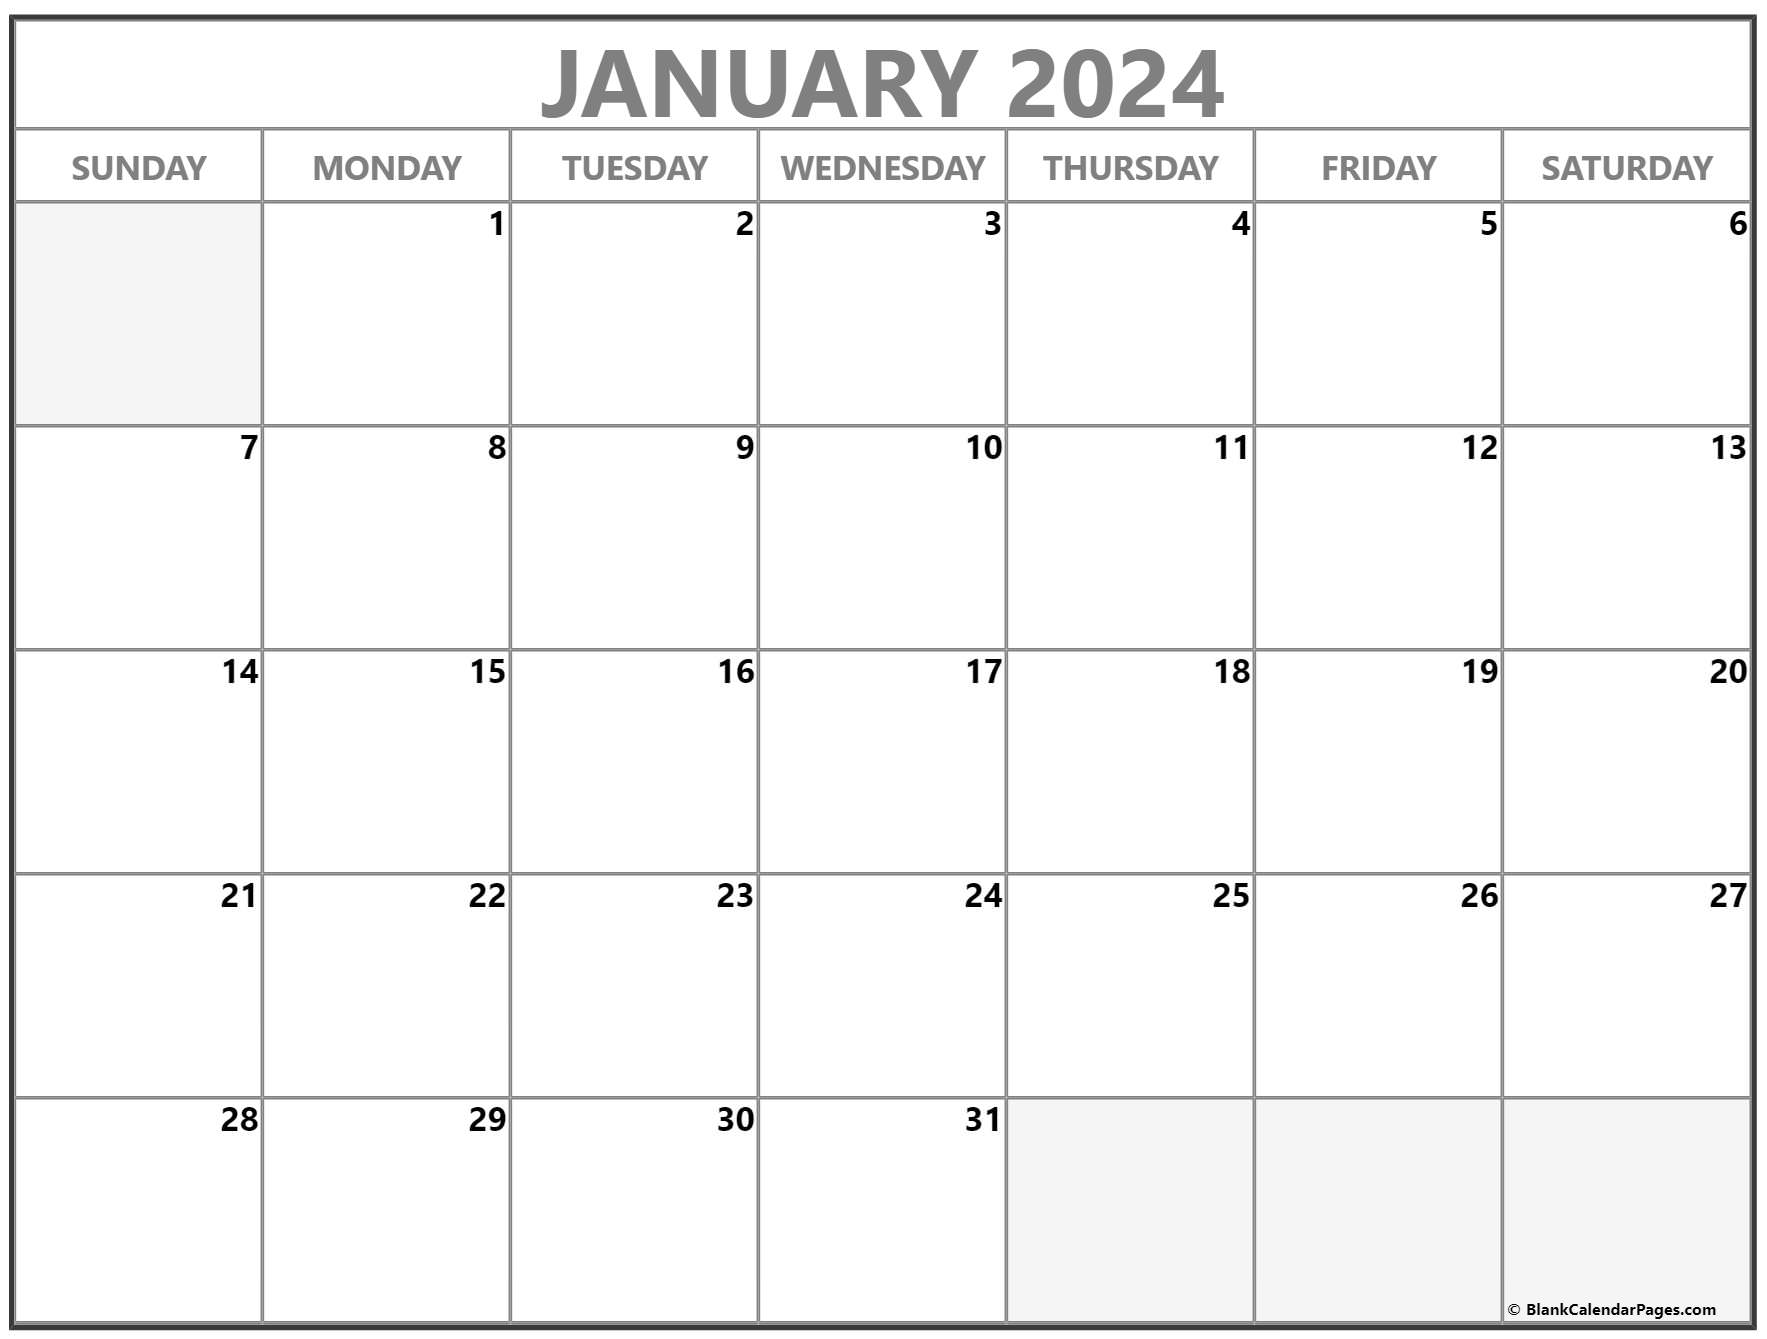 January 2023 calendar | free printable calendar